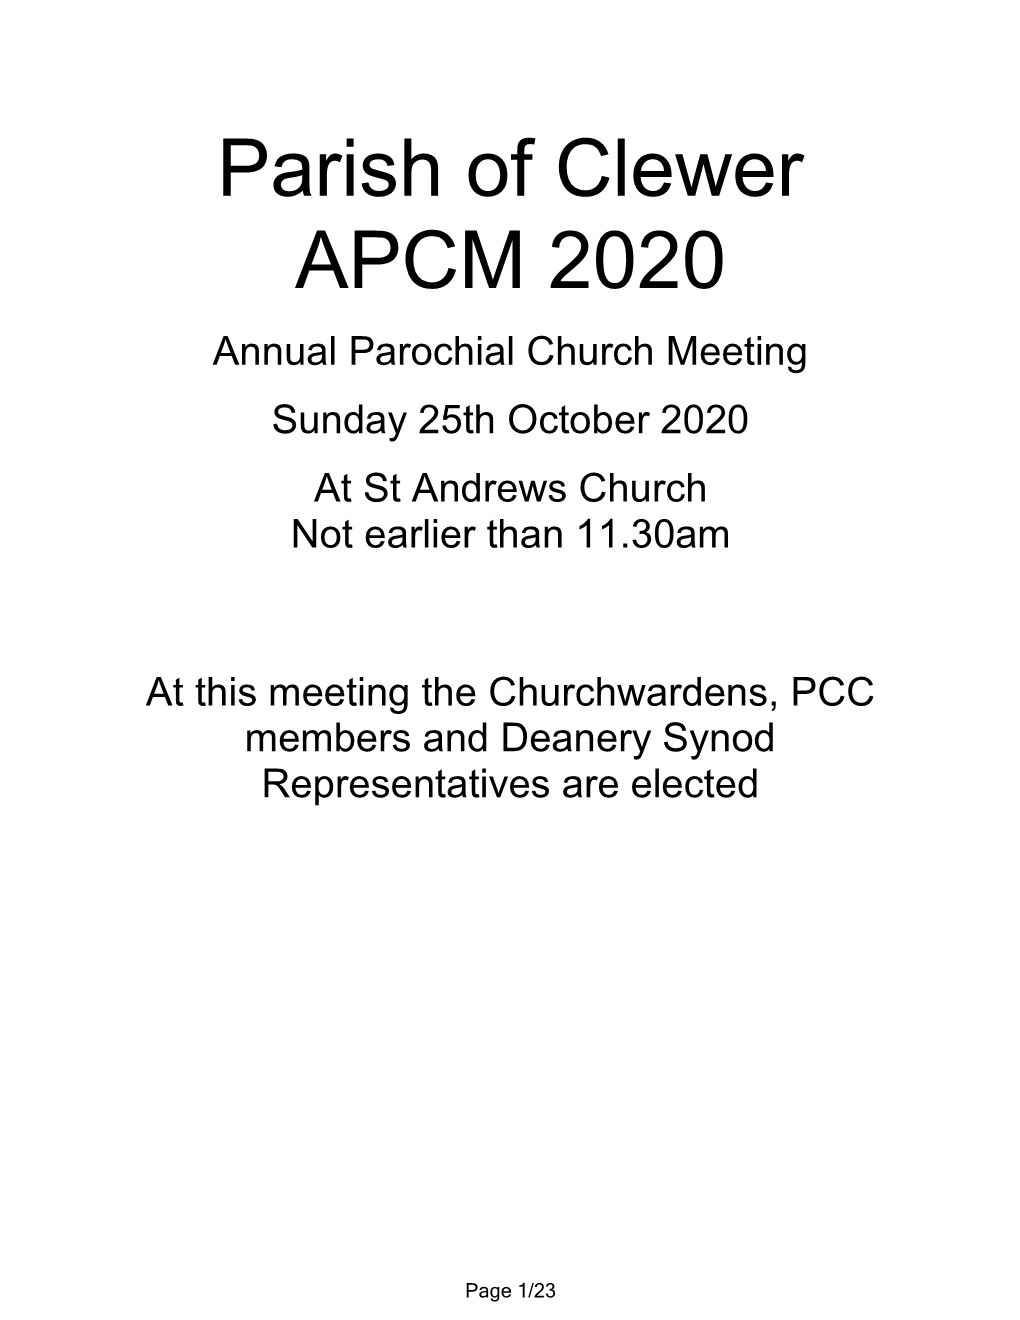 Parish of Clewer APCM 2020